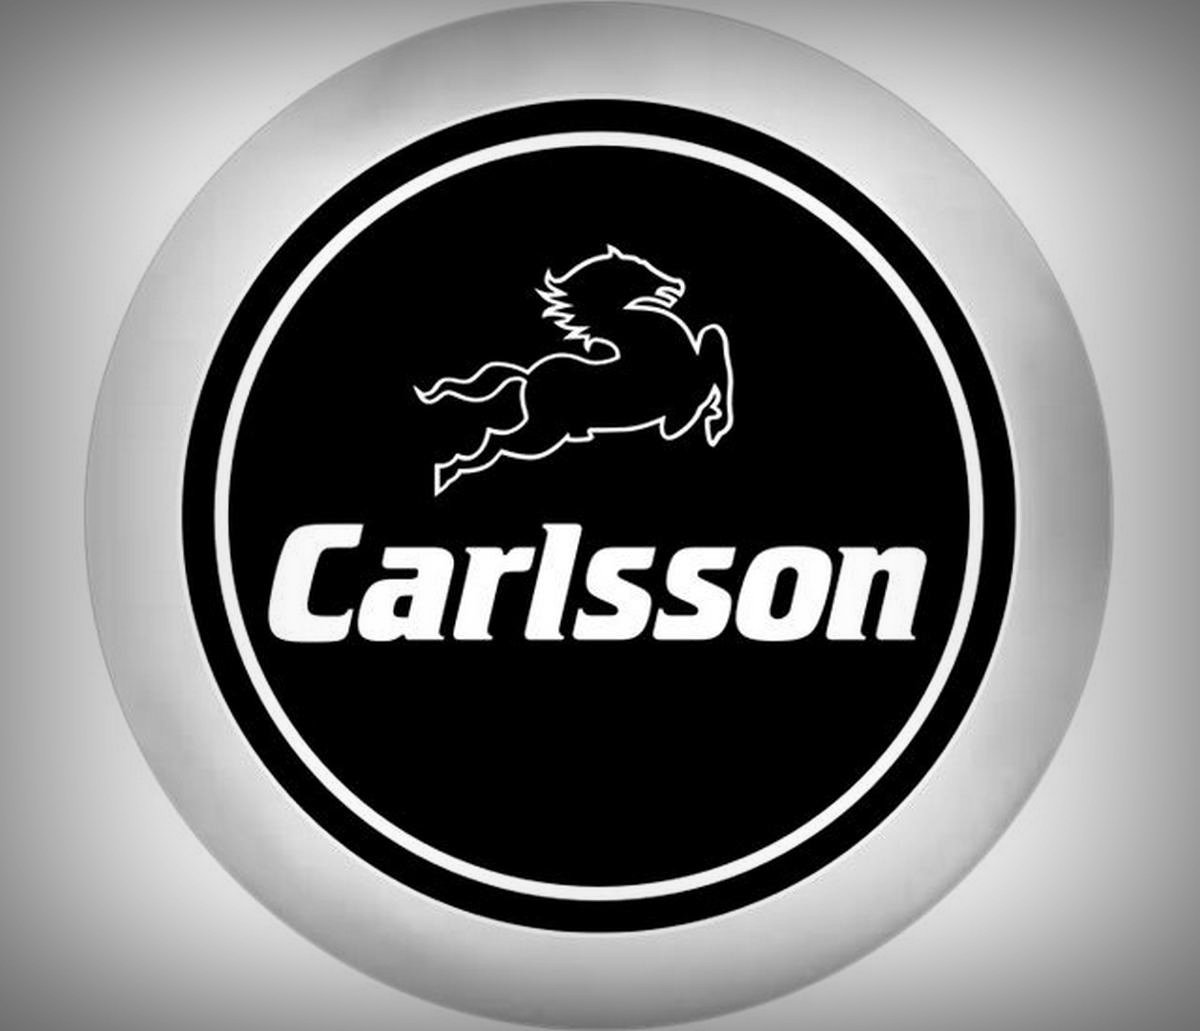 car logos with horse calsson logo image